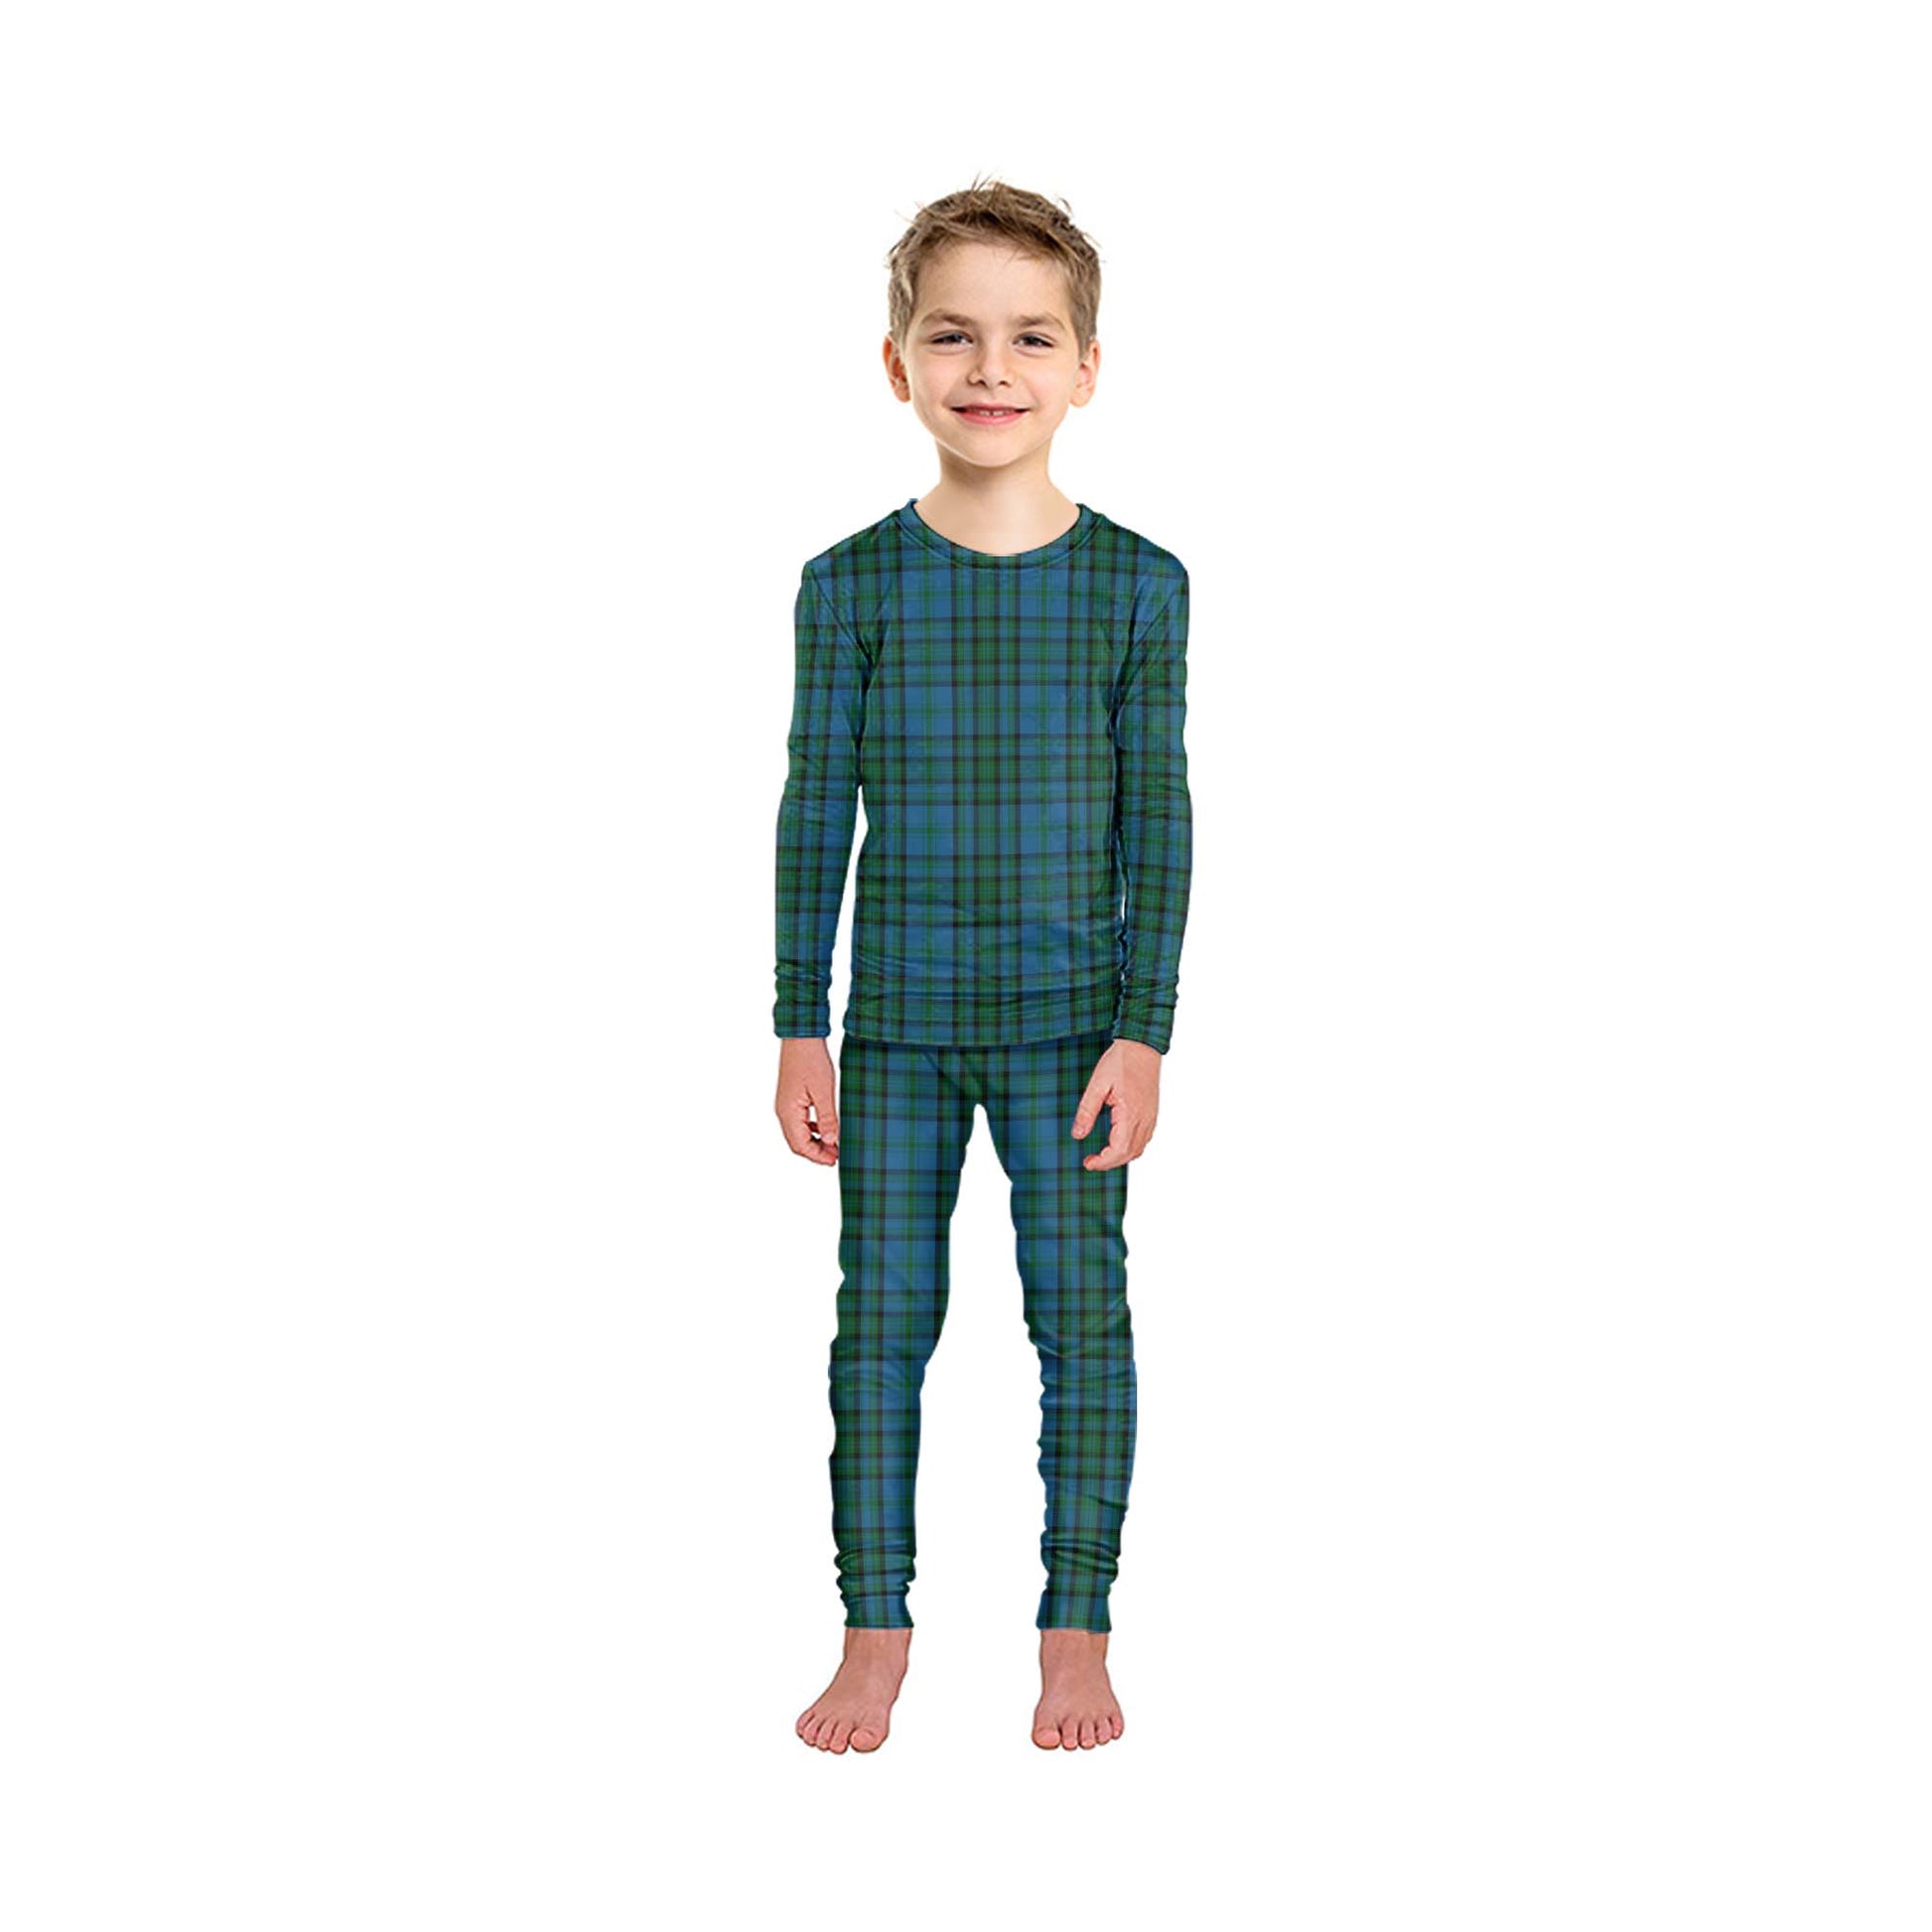 Matheson Hunting Tartan Pajamas Family Set - Tartanvibesclothing